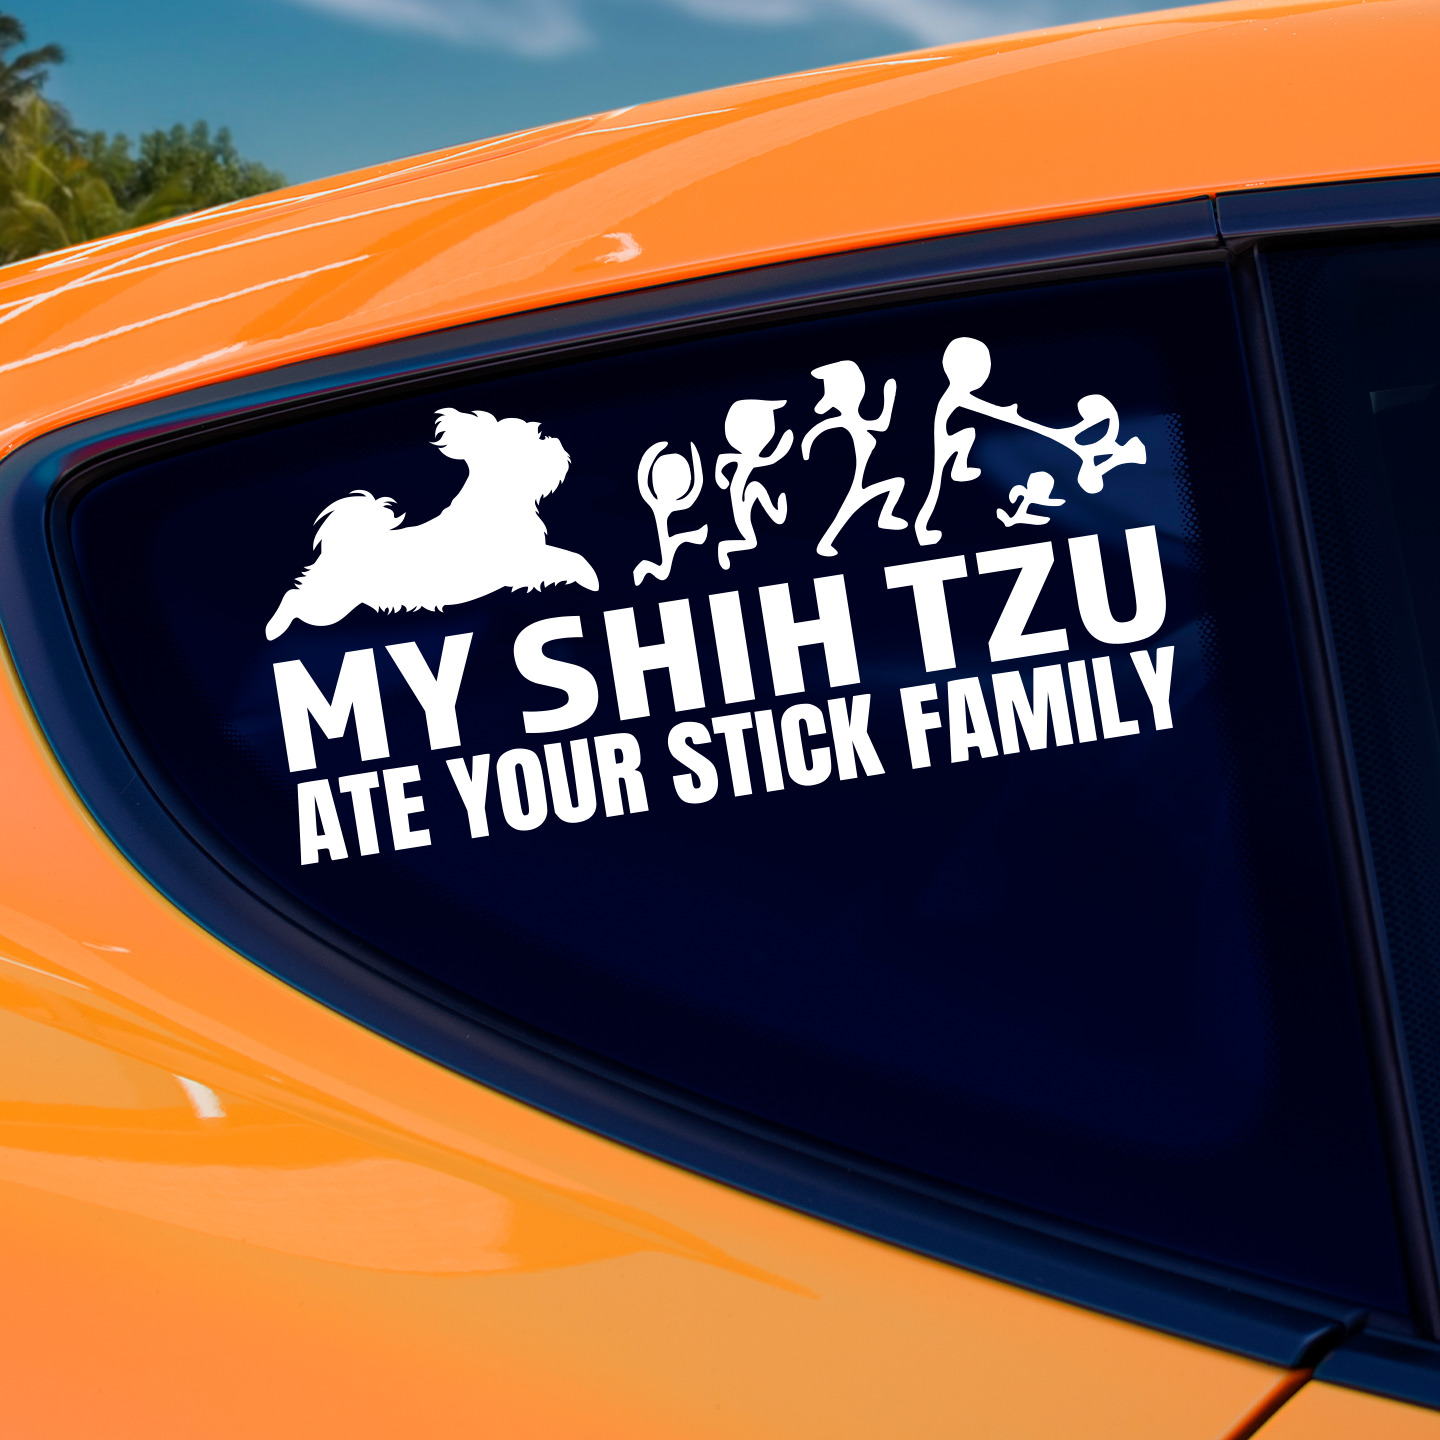 My Shih Tzu Ate Your Stick Family Sticker